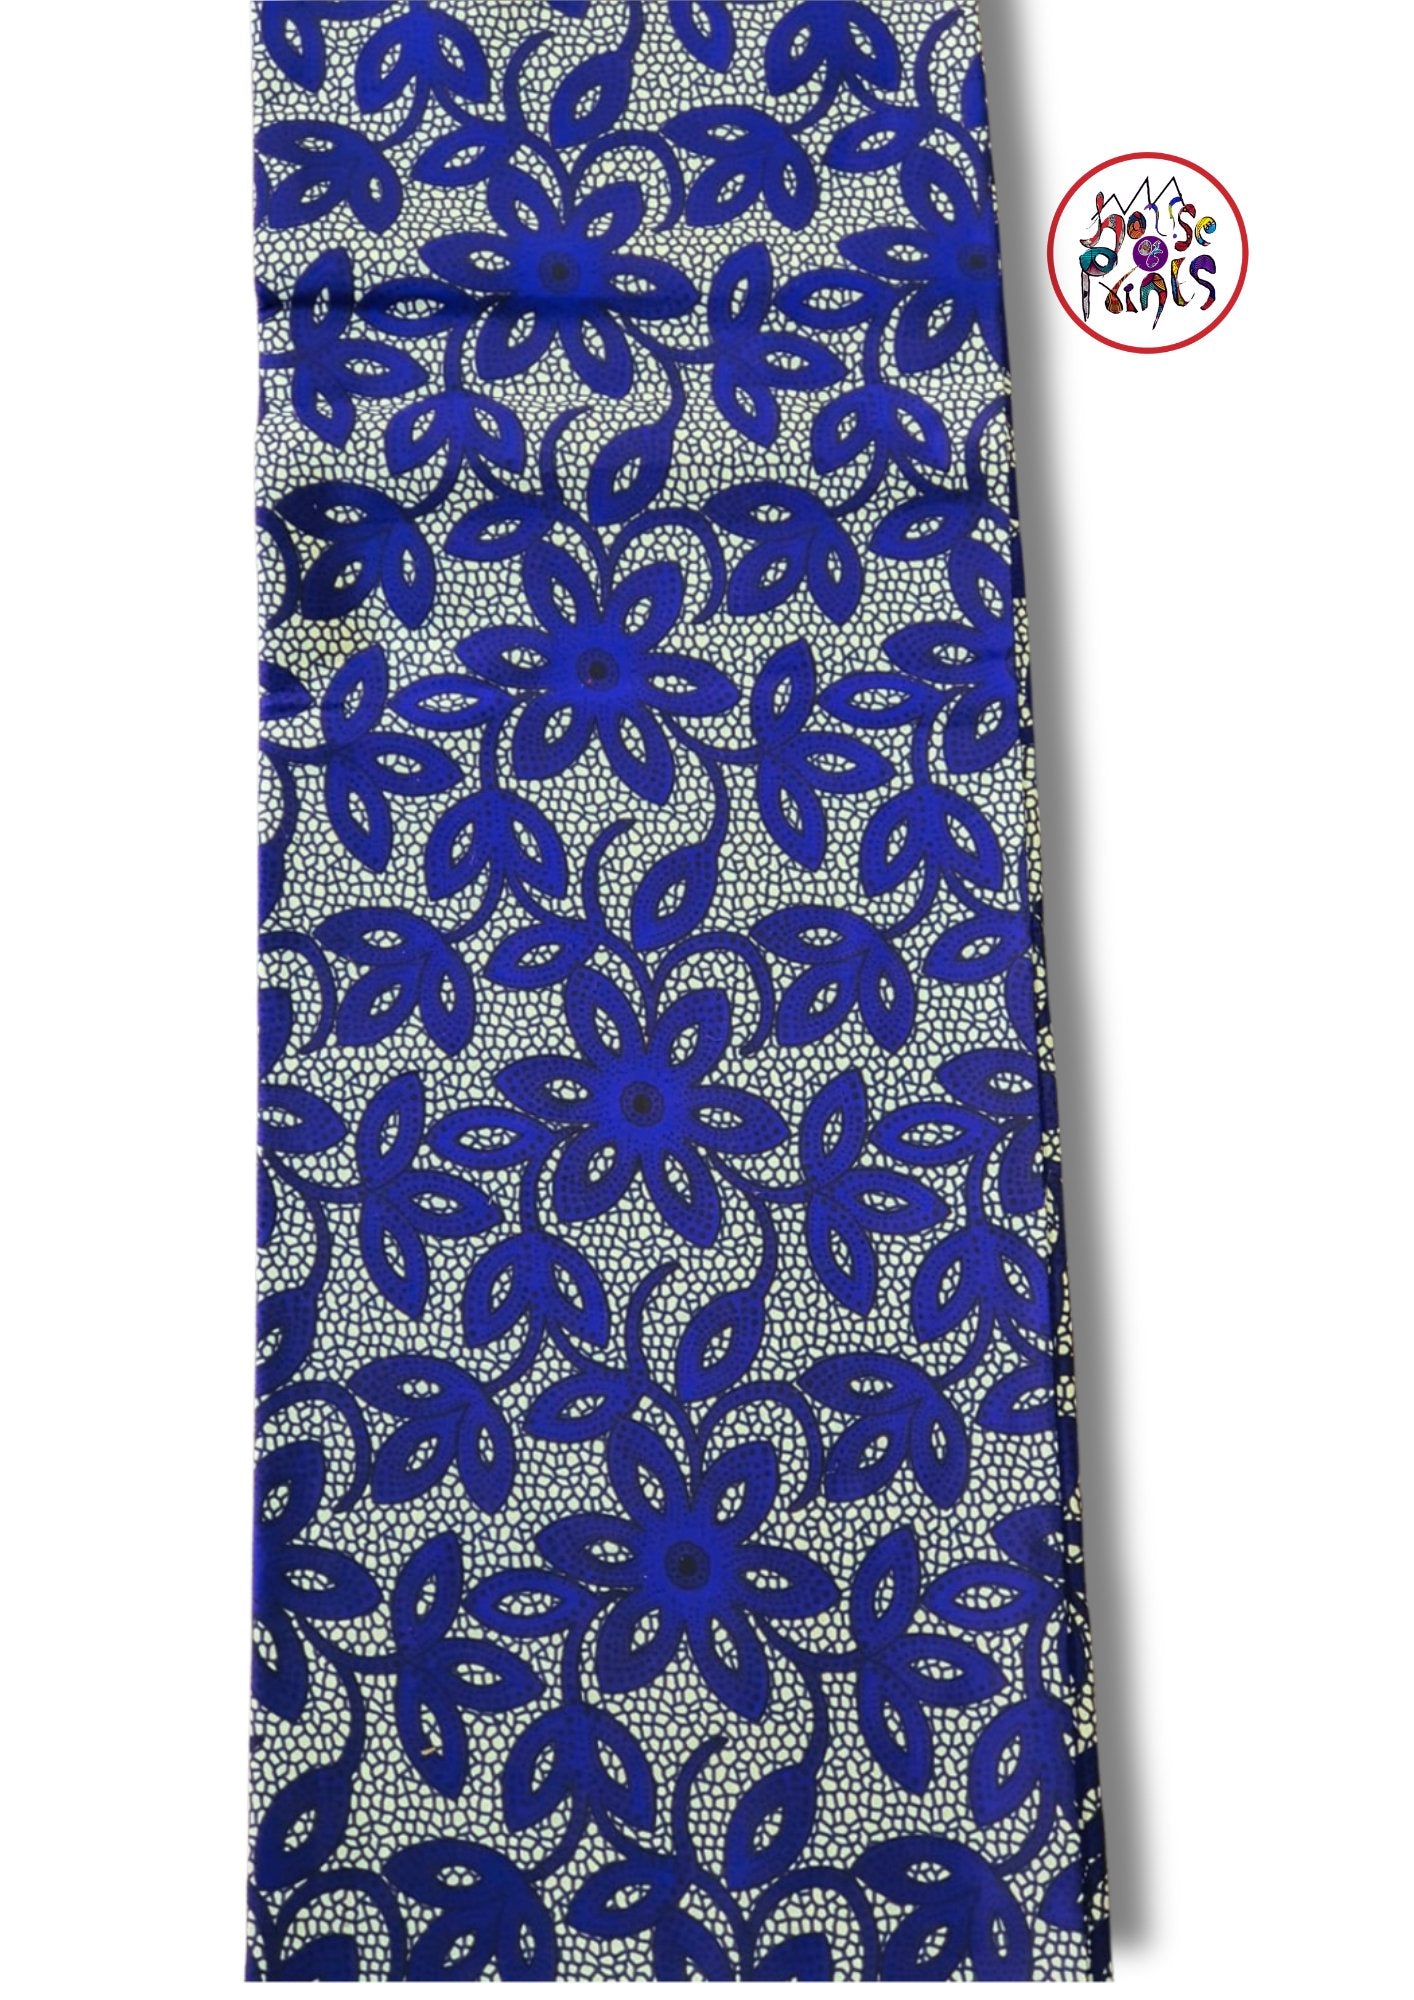 Blue Floral Pattern Ankara Fabric - House of Prints